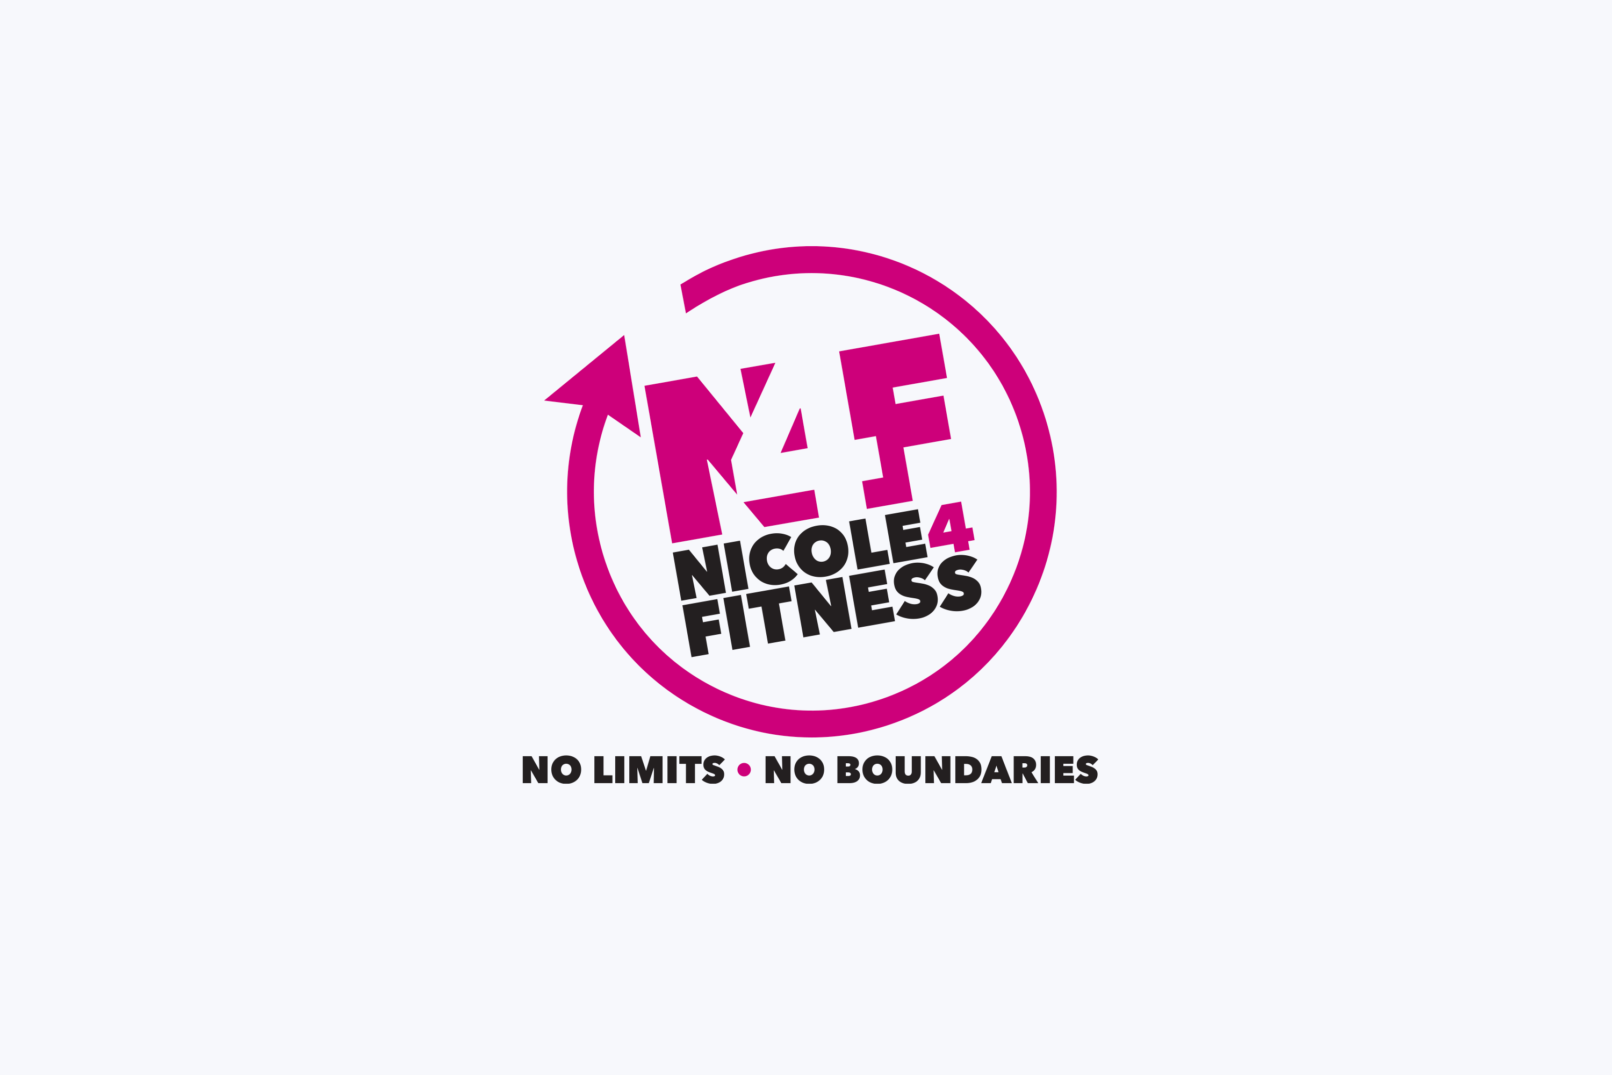 nicole 4 fitness logo design